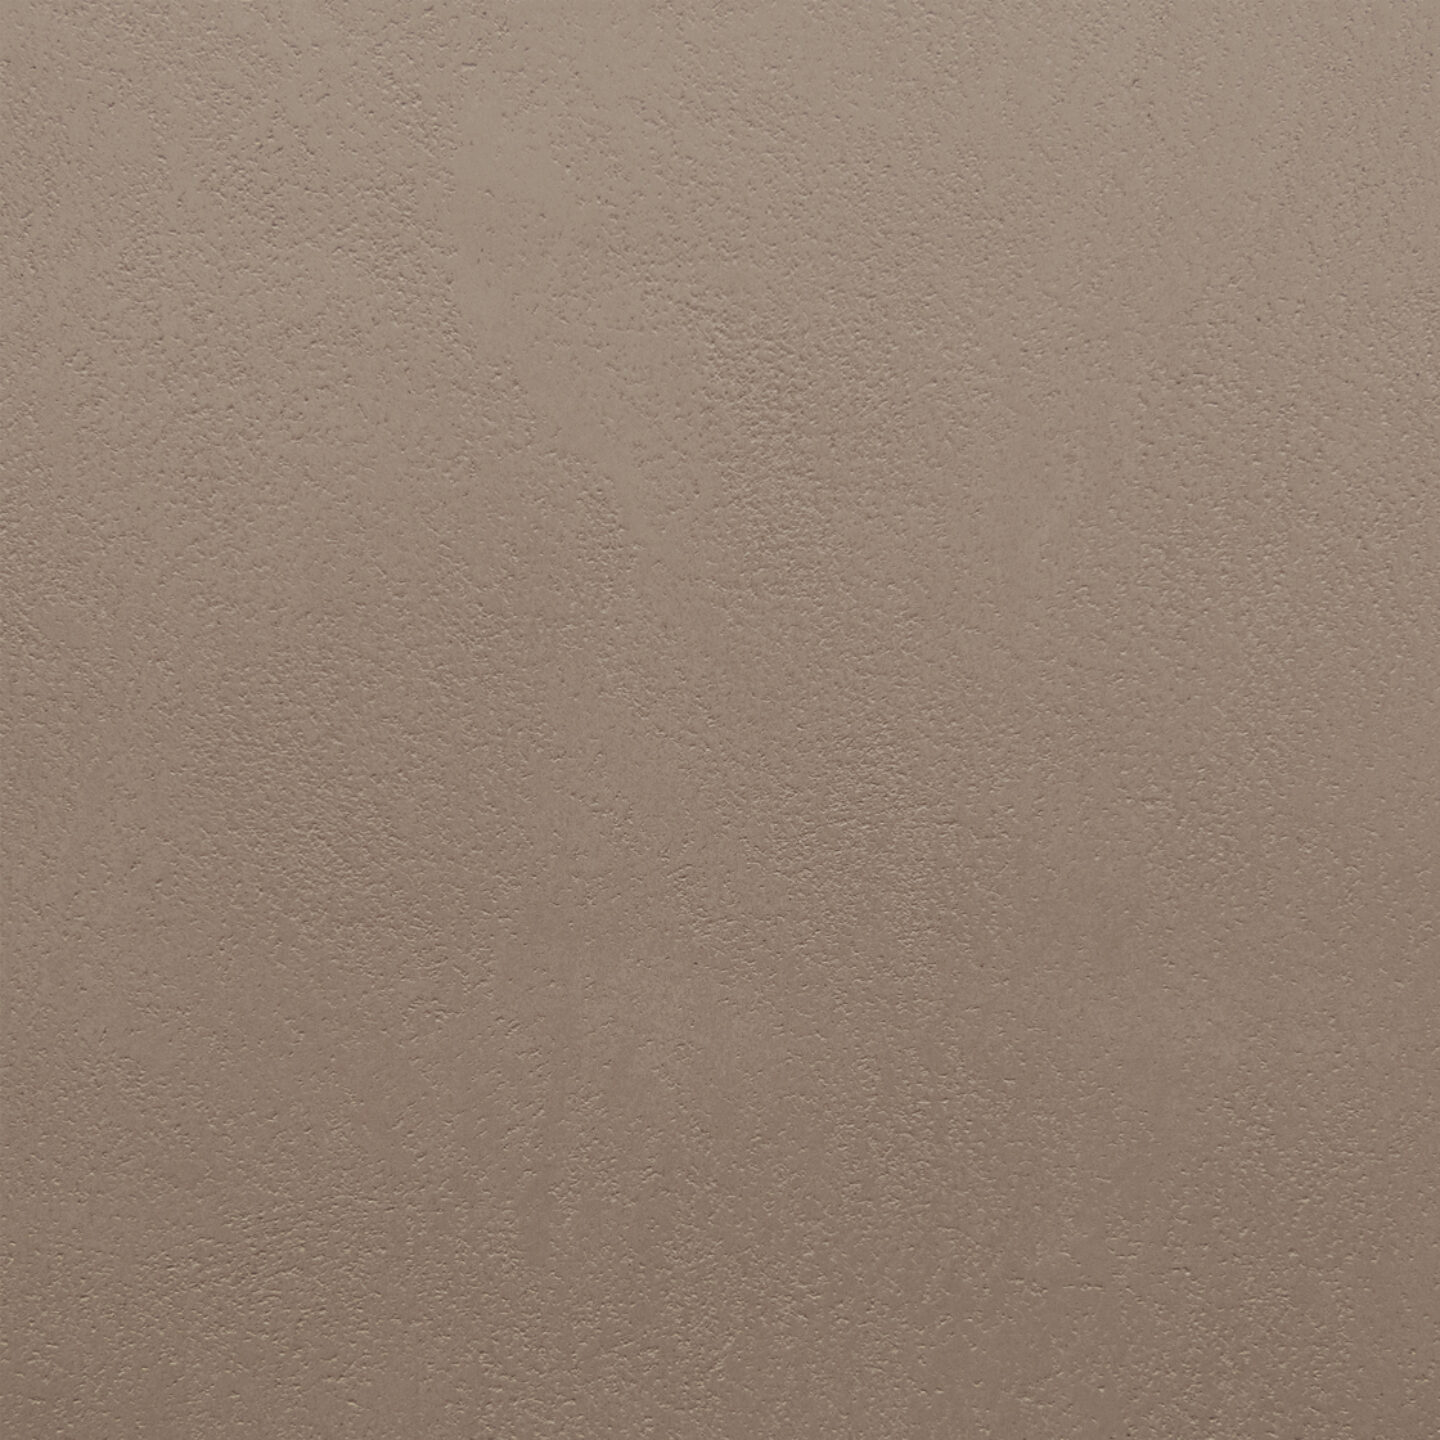 Close up of Armourcoat leatherstone exterior polished plaster finish - 32